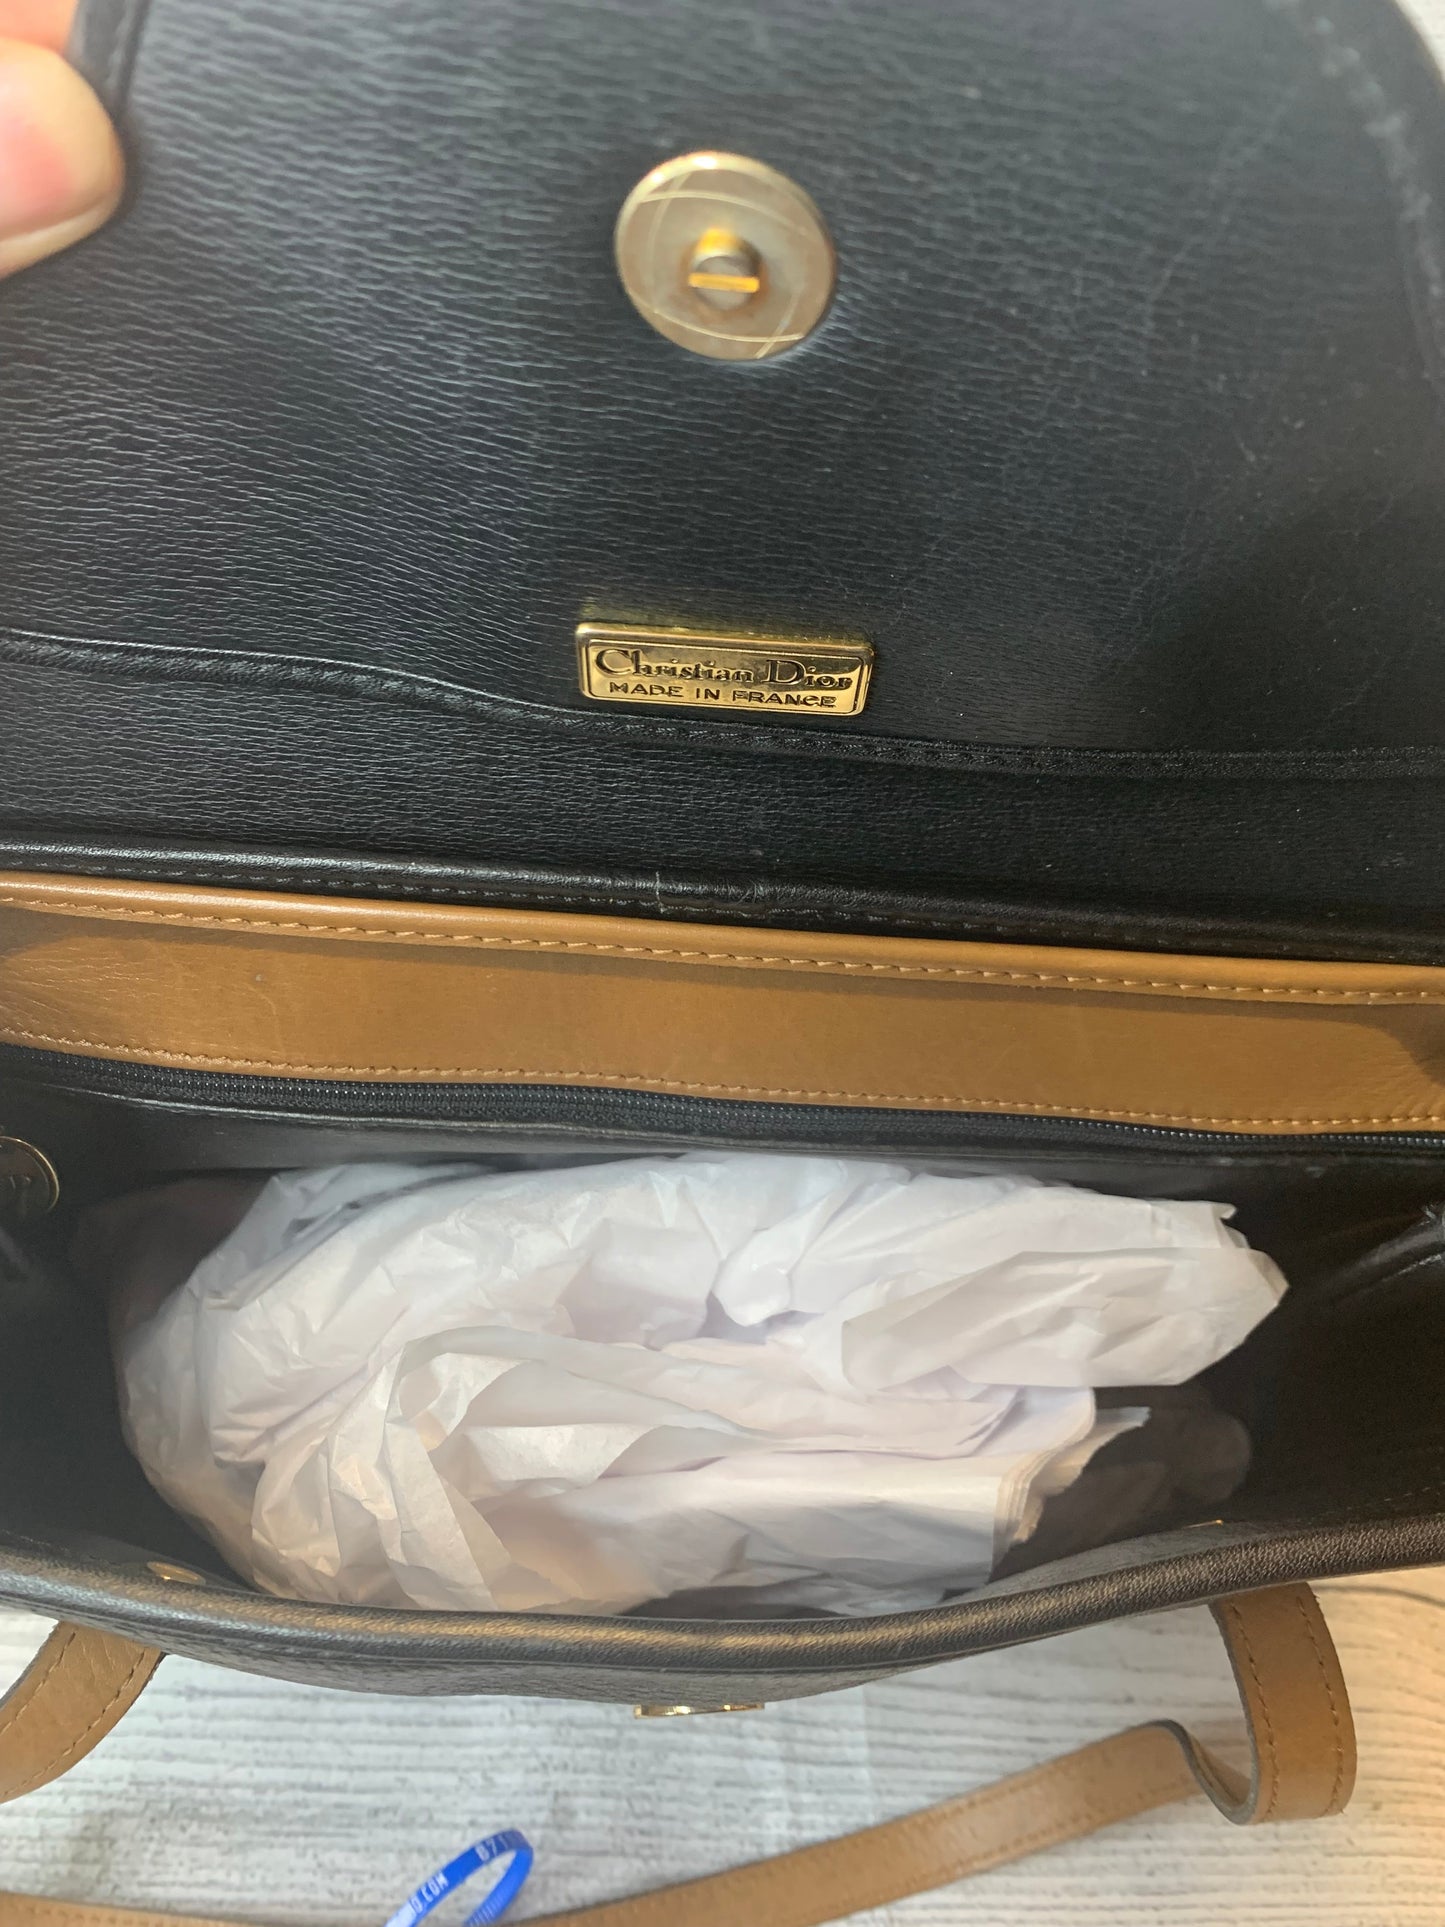 Handbag By Christian Dior  Size: Medium